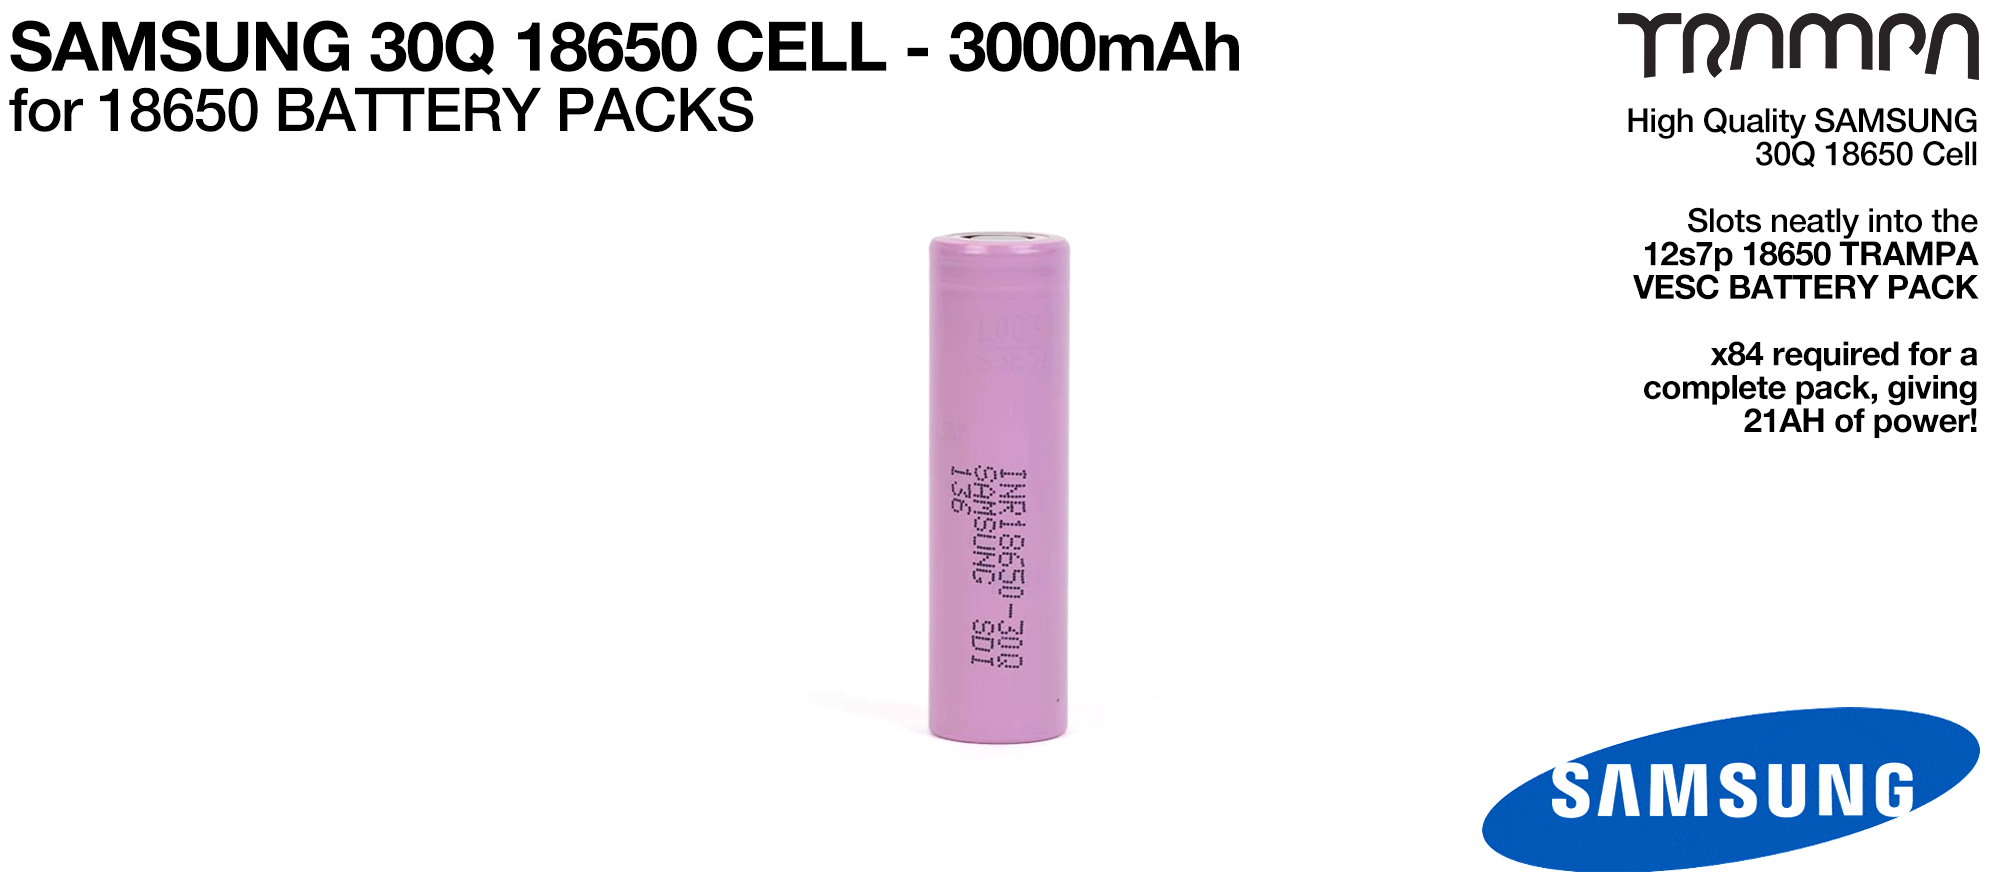 SAMSUNG 30Q 18650 Cells 3000mAh - UK CUSTOMERS ONLY